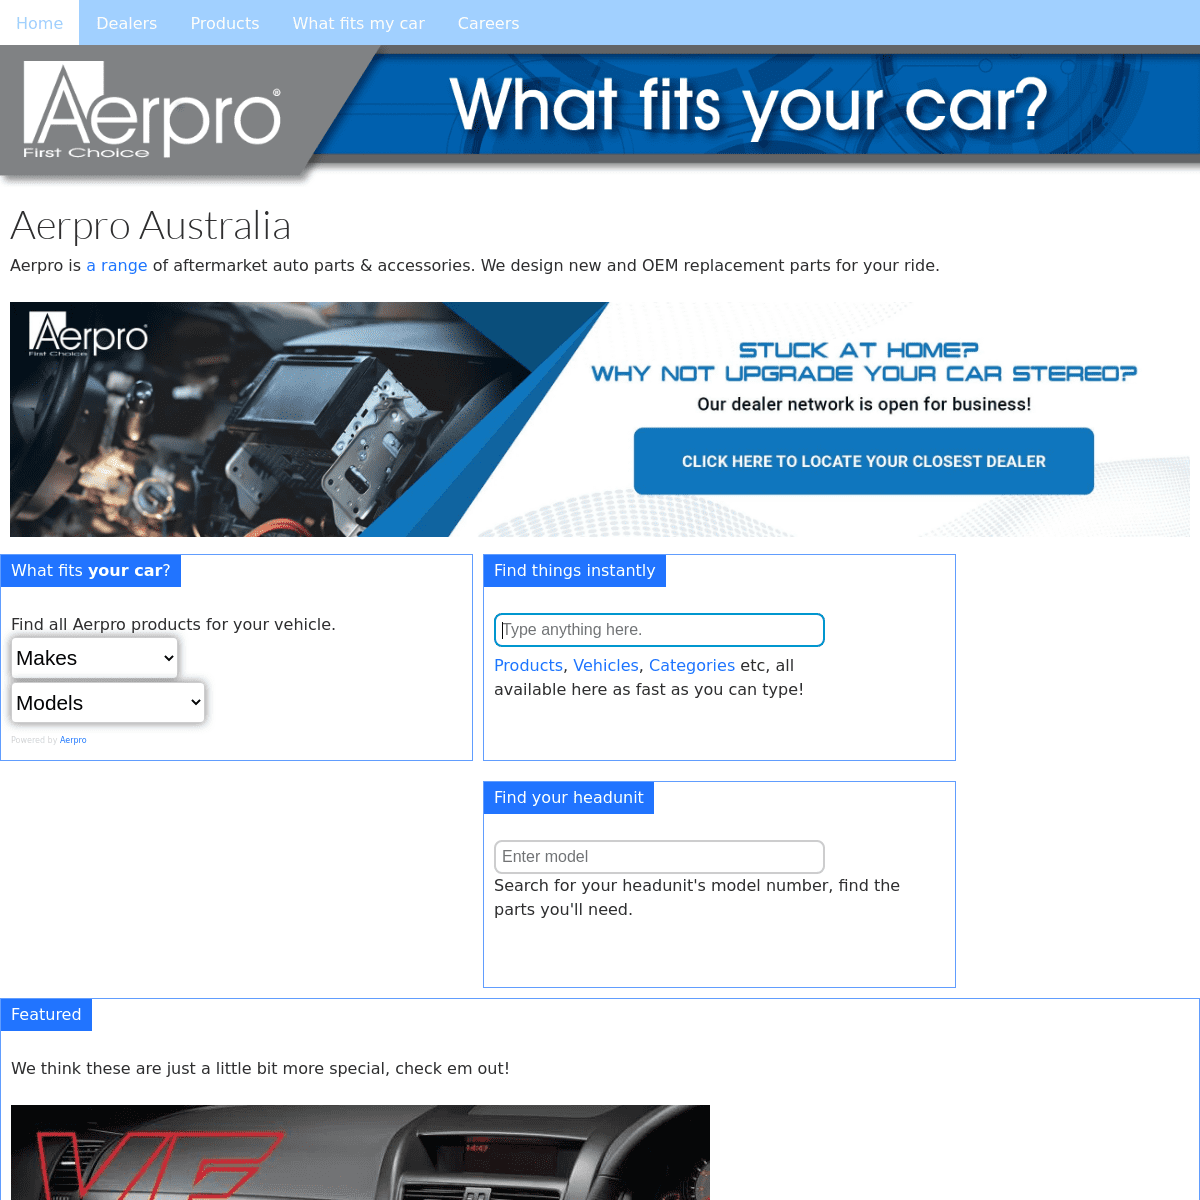 A complete backup of aerpro.com